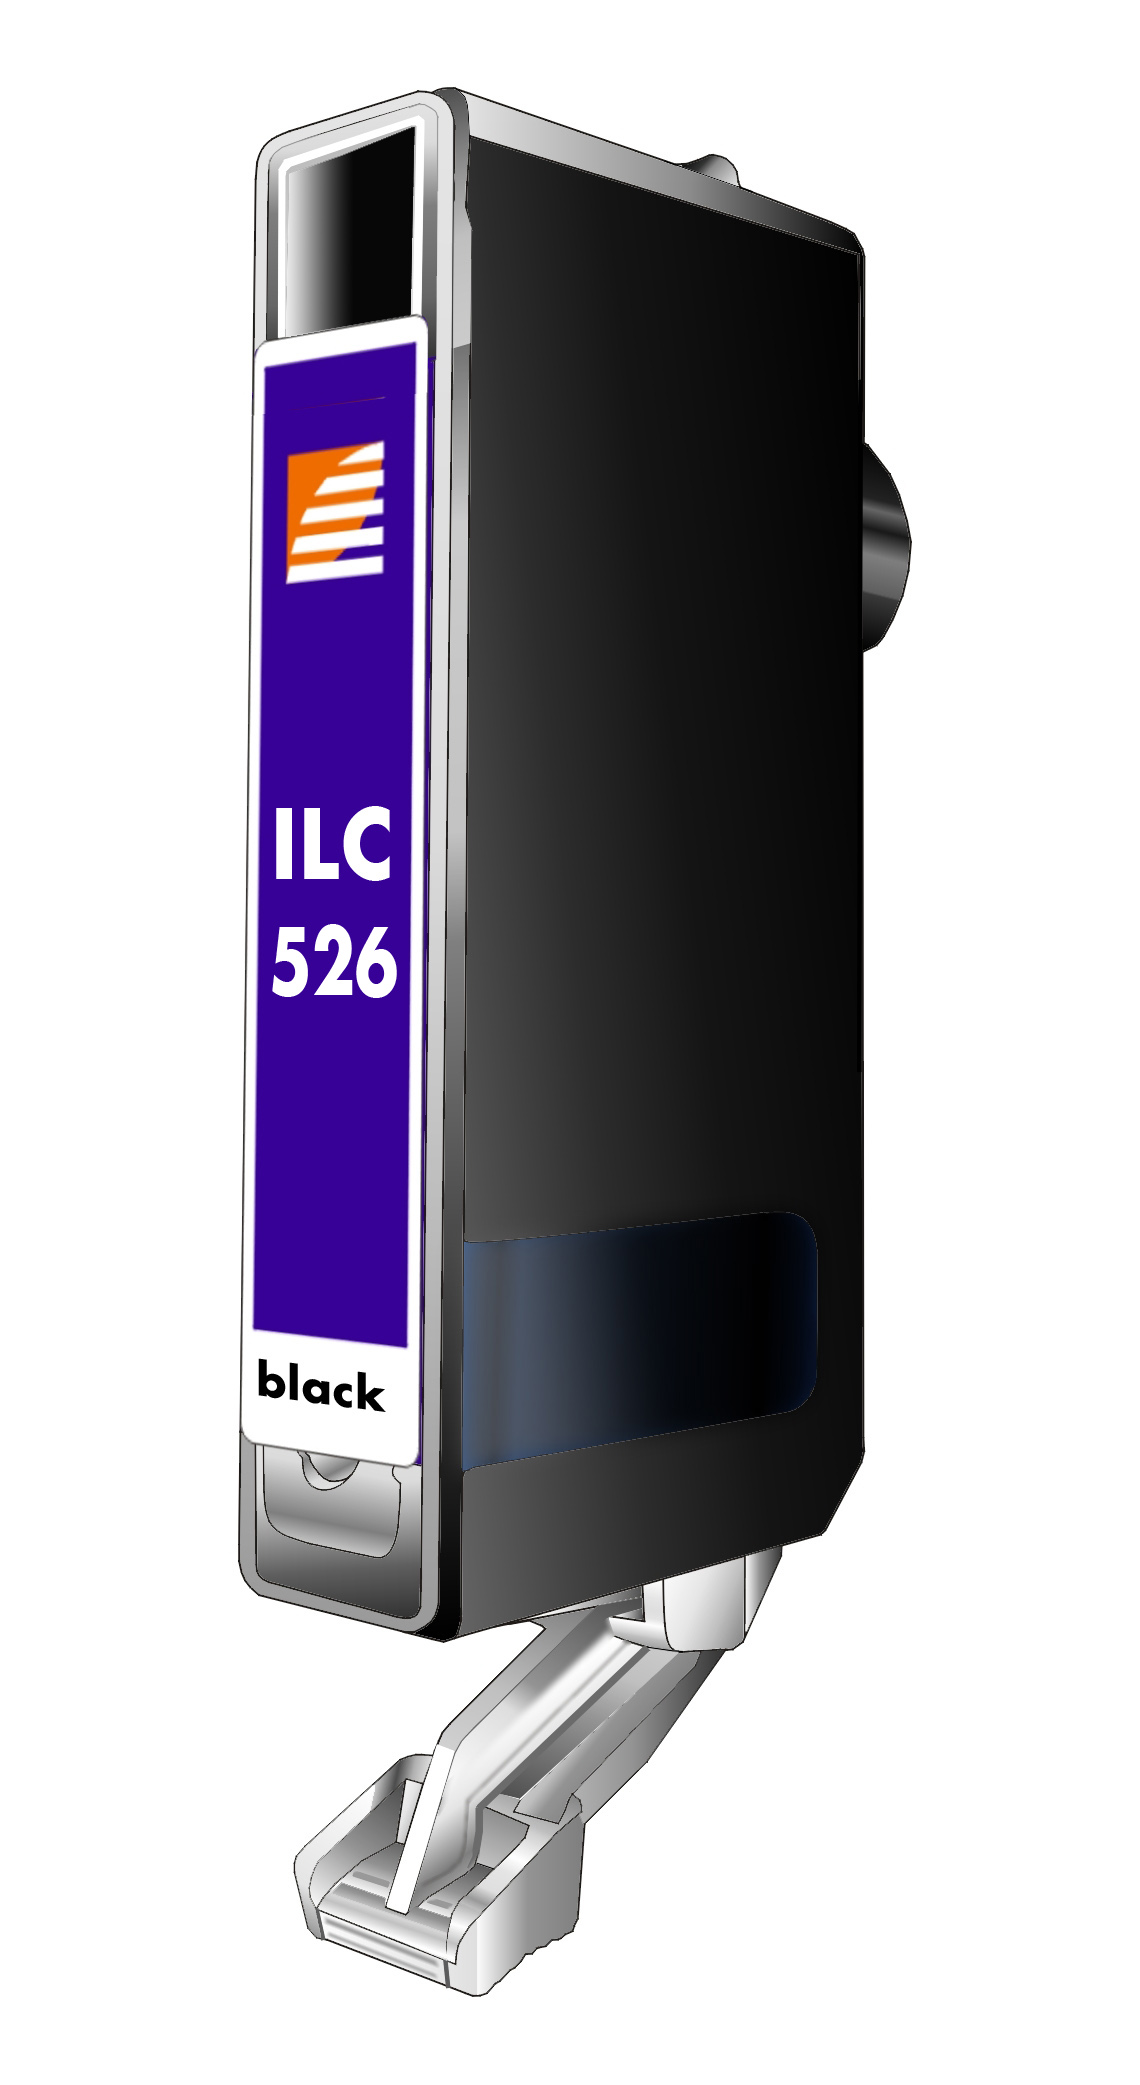 LIC 526 black